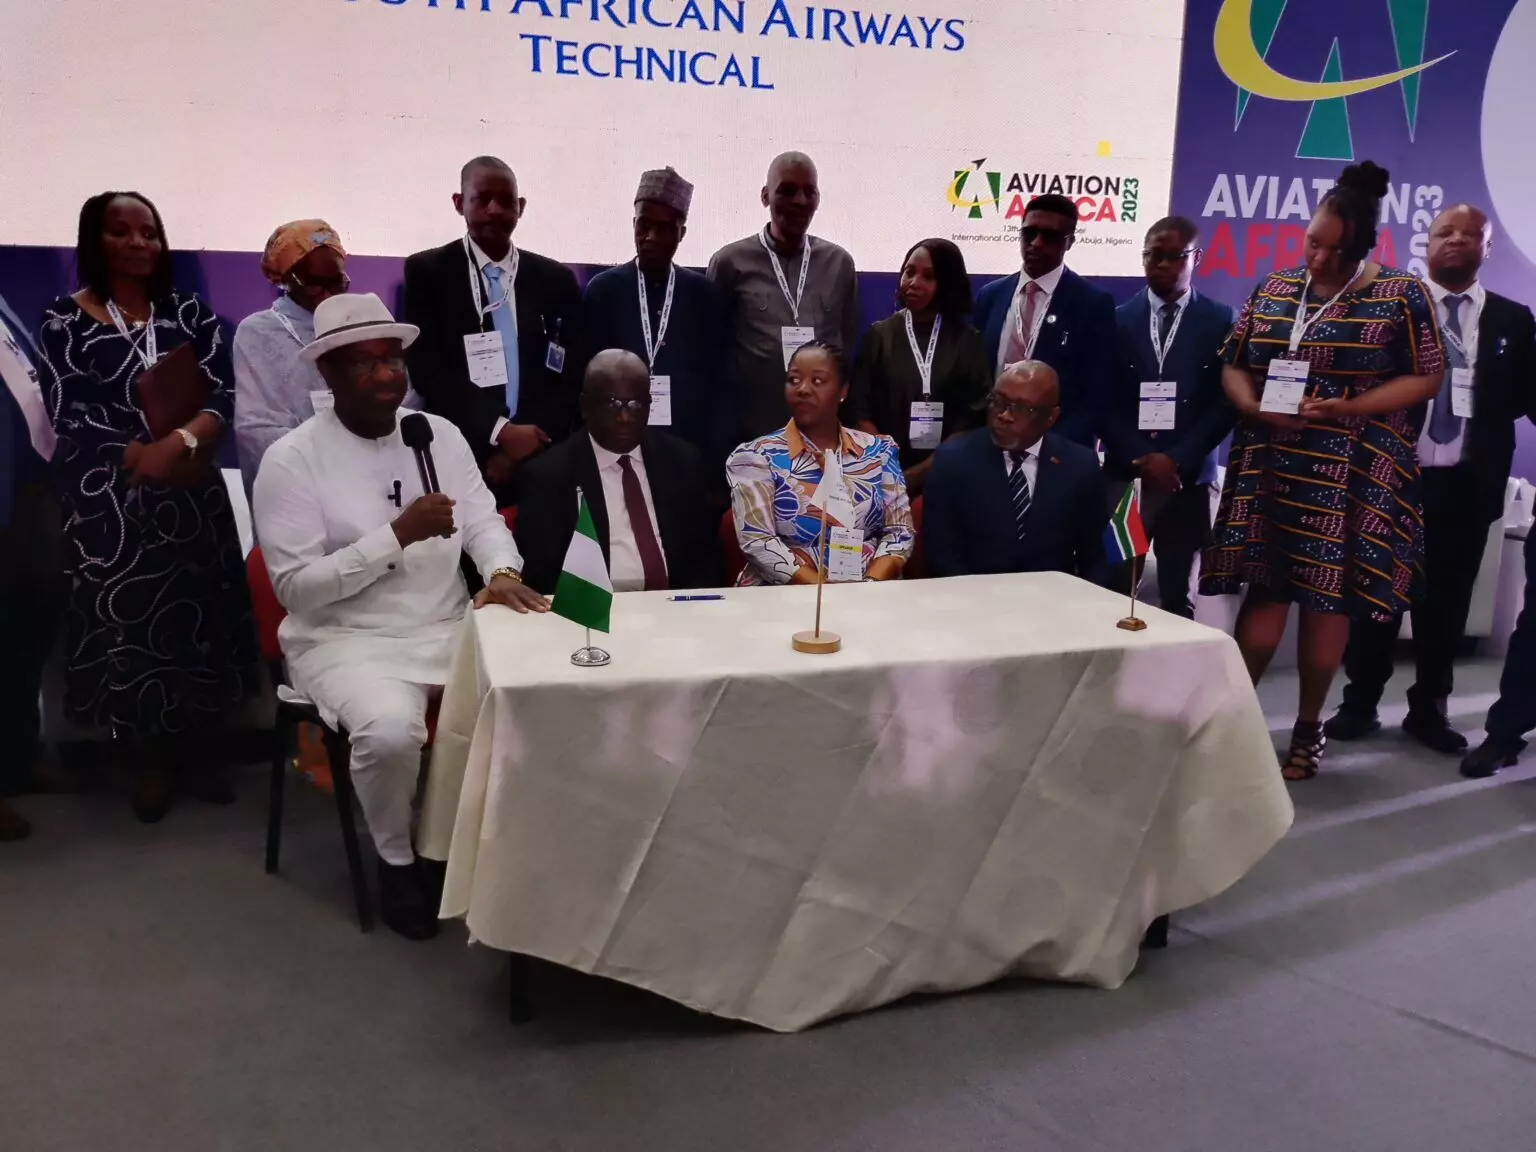 Nigeria, South Africa sign landmark regulatory deal on aviation security, safety